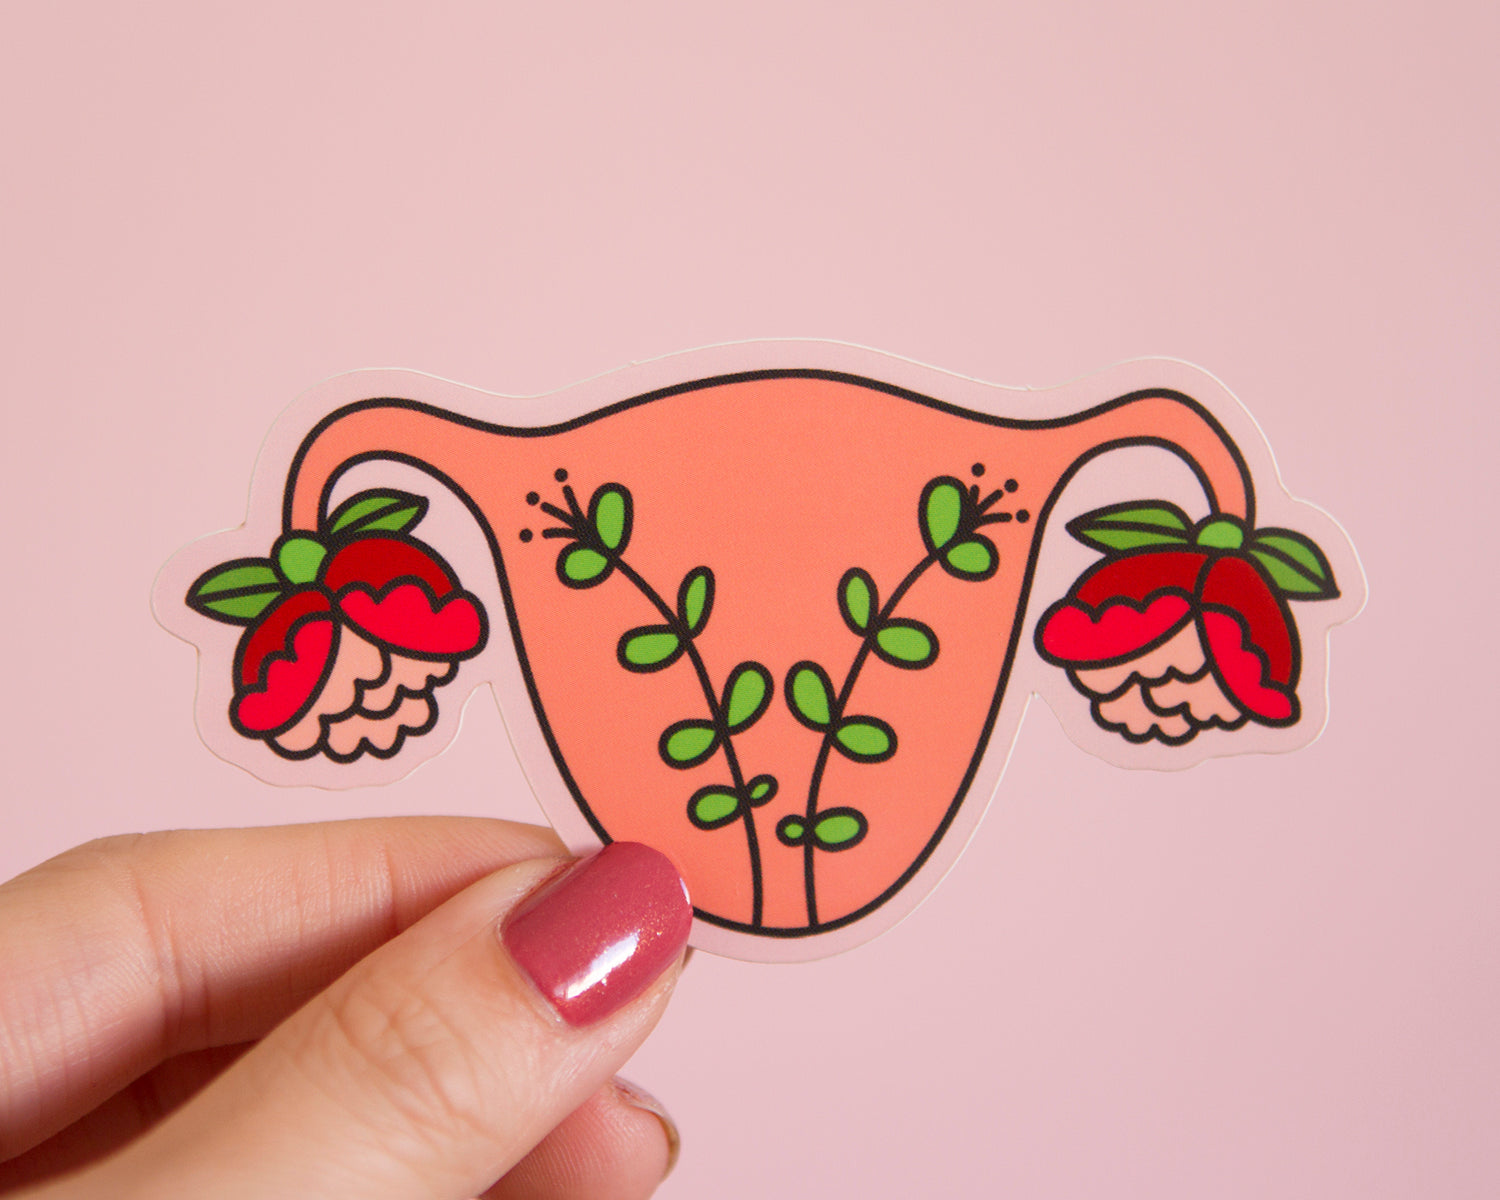 floral uterus pins (fundraiser for planned parenthood) – kata golda handmade